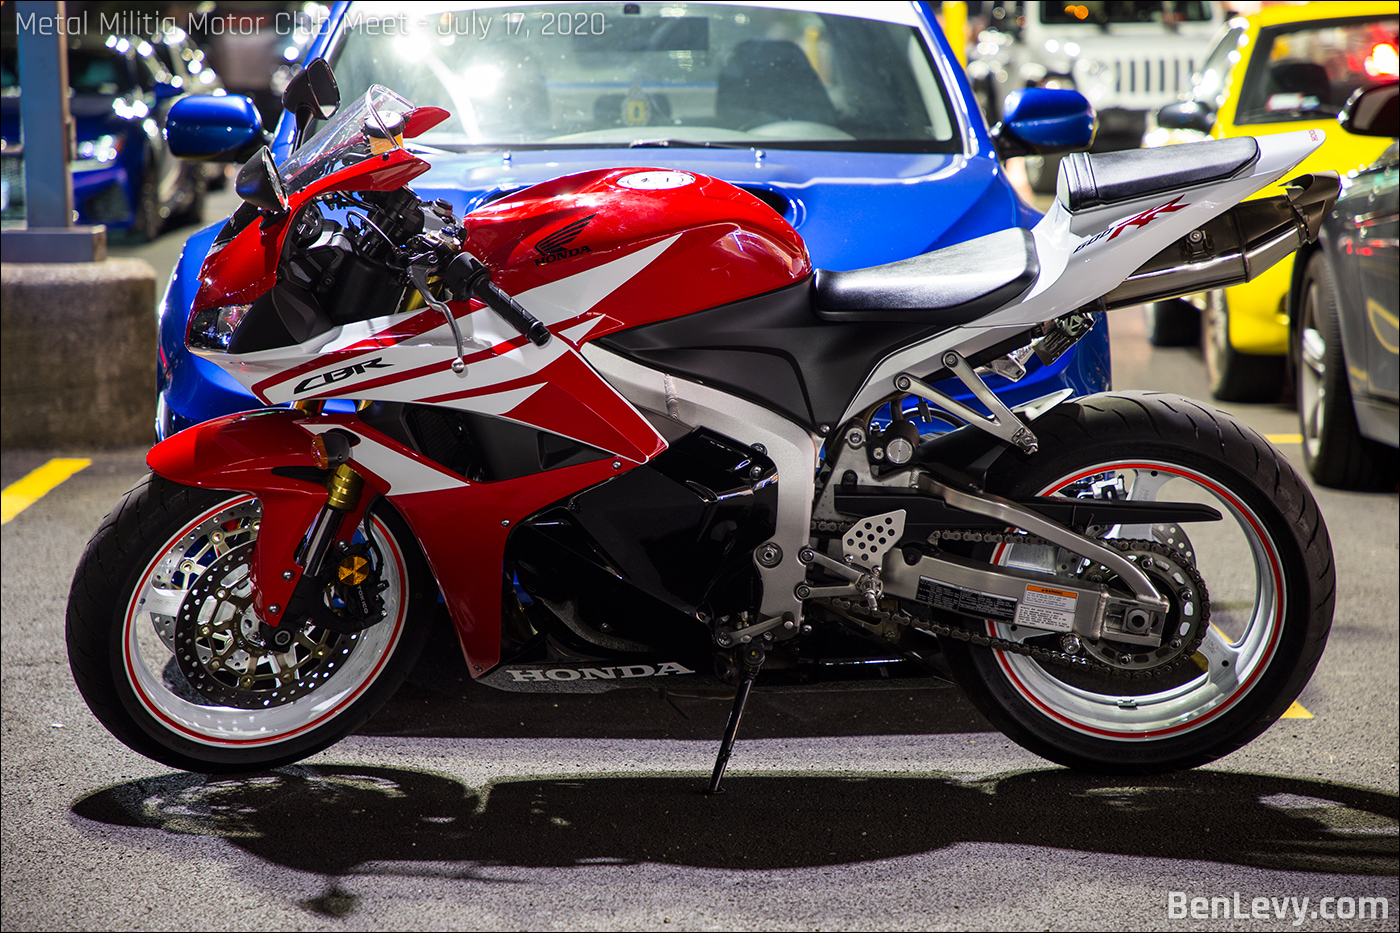 Red and White Honda CBR600RR